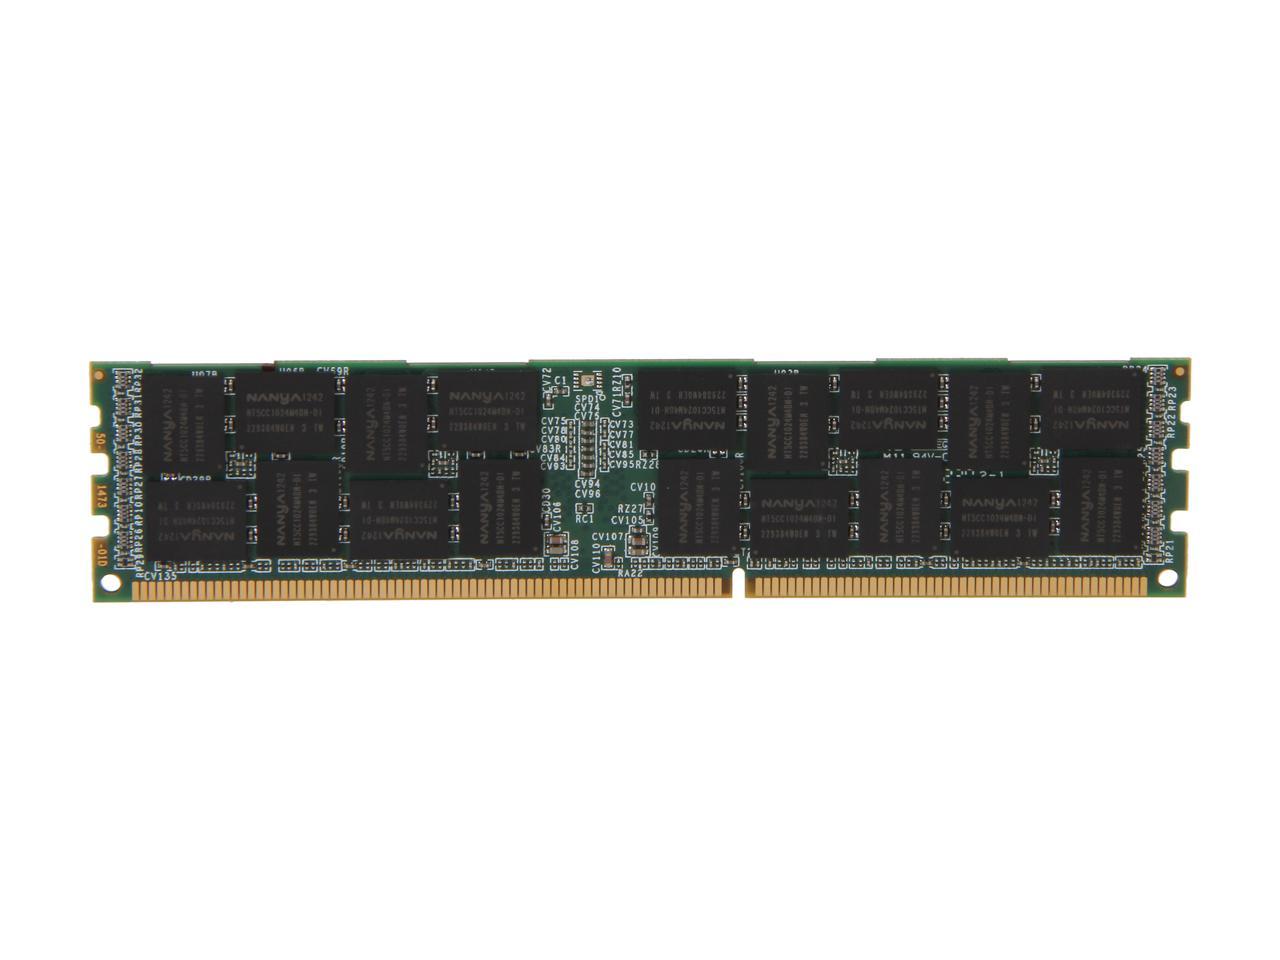 Mushkin Enhanced Proline 16GB 240-Pin DDR3 SDRAM ECC Registered Server Memory Model 992087